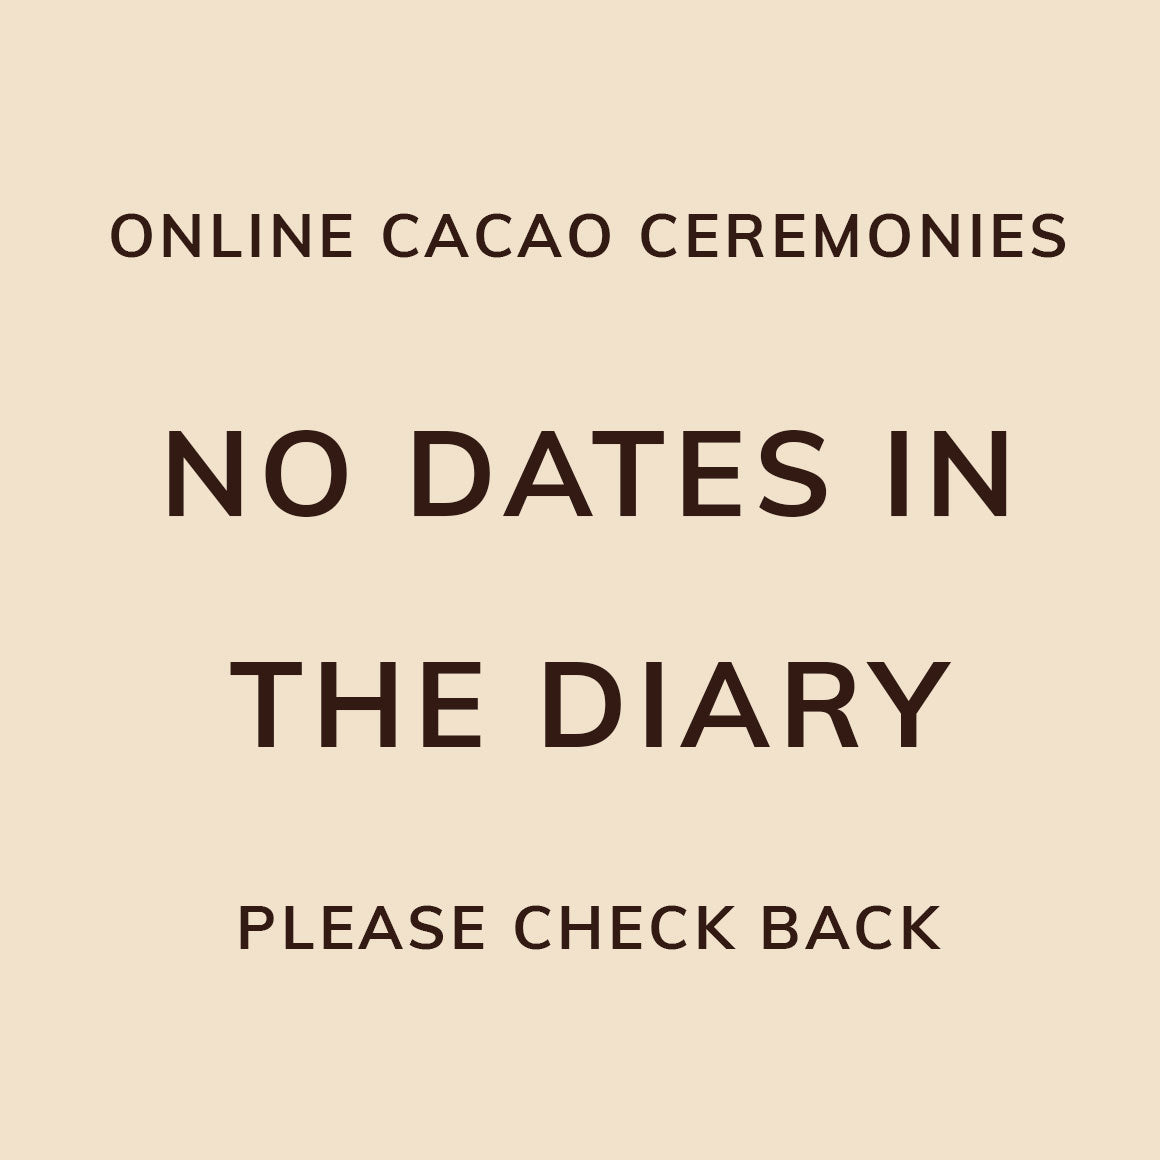 online cacao ceremonies - no dates